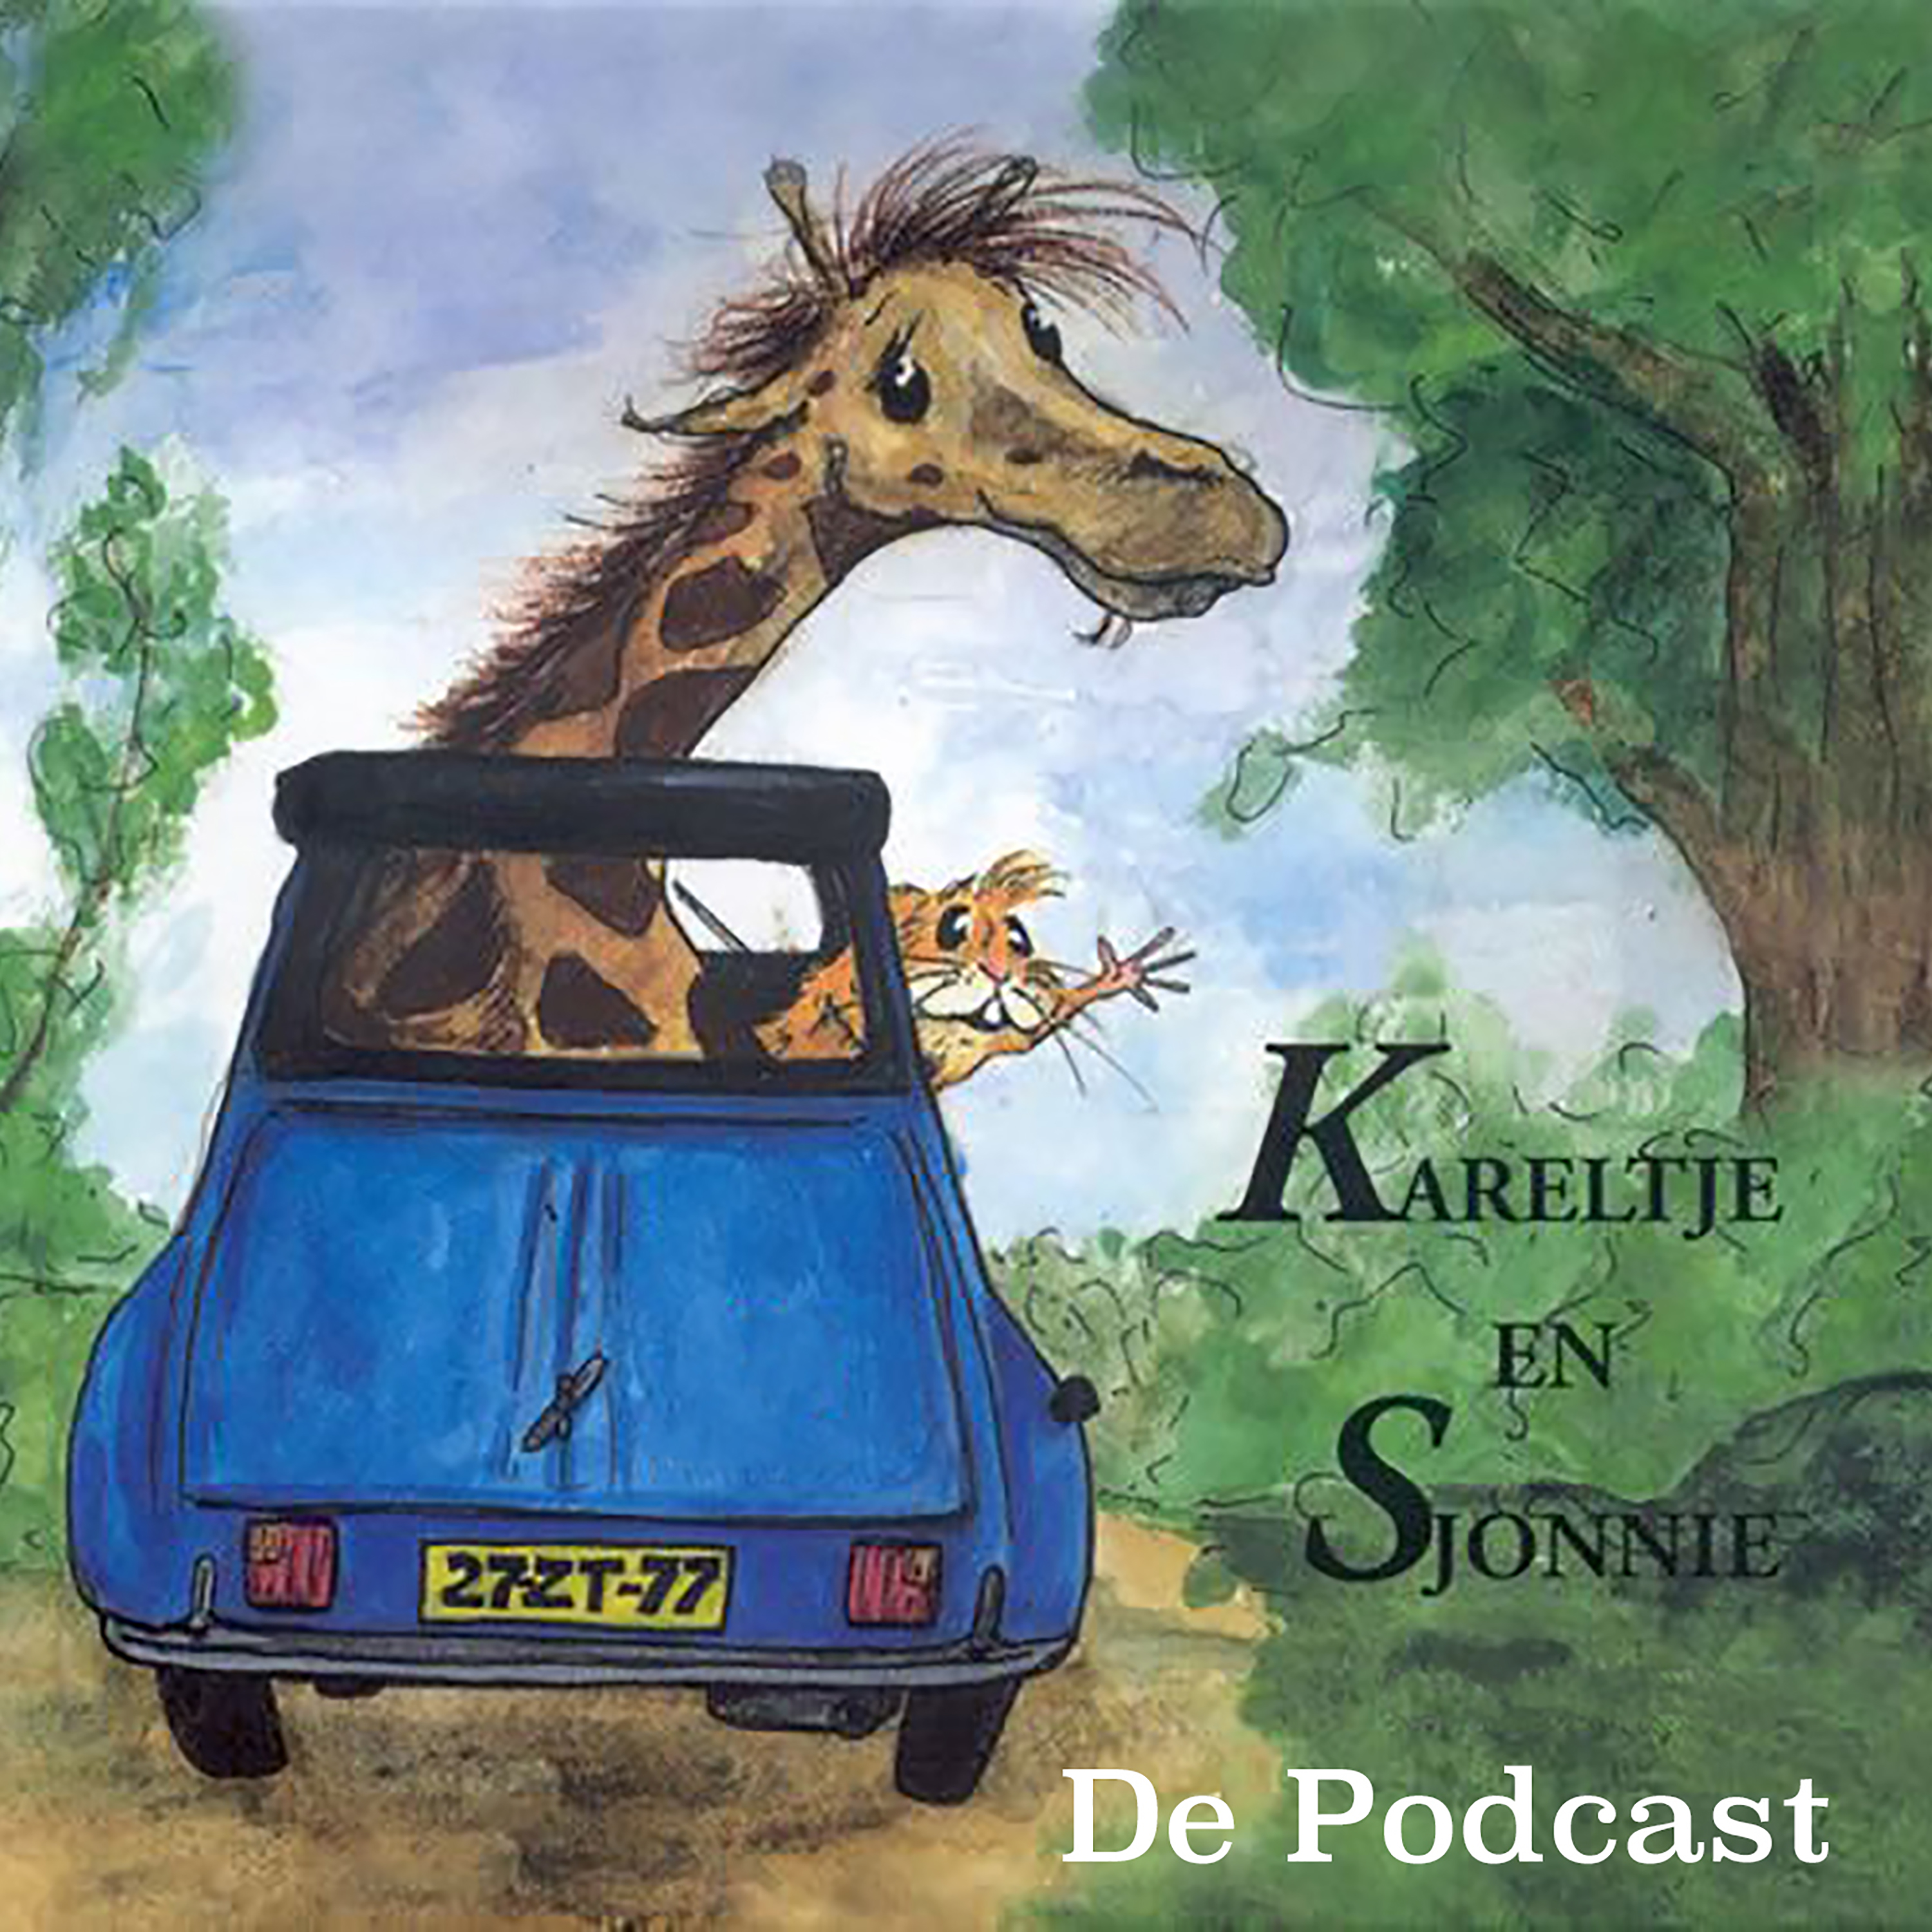 Kareltje en Sjonnie De Podcast logo